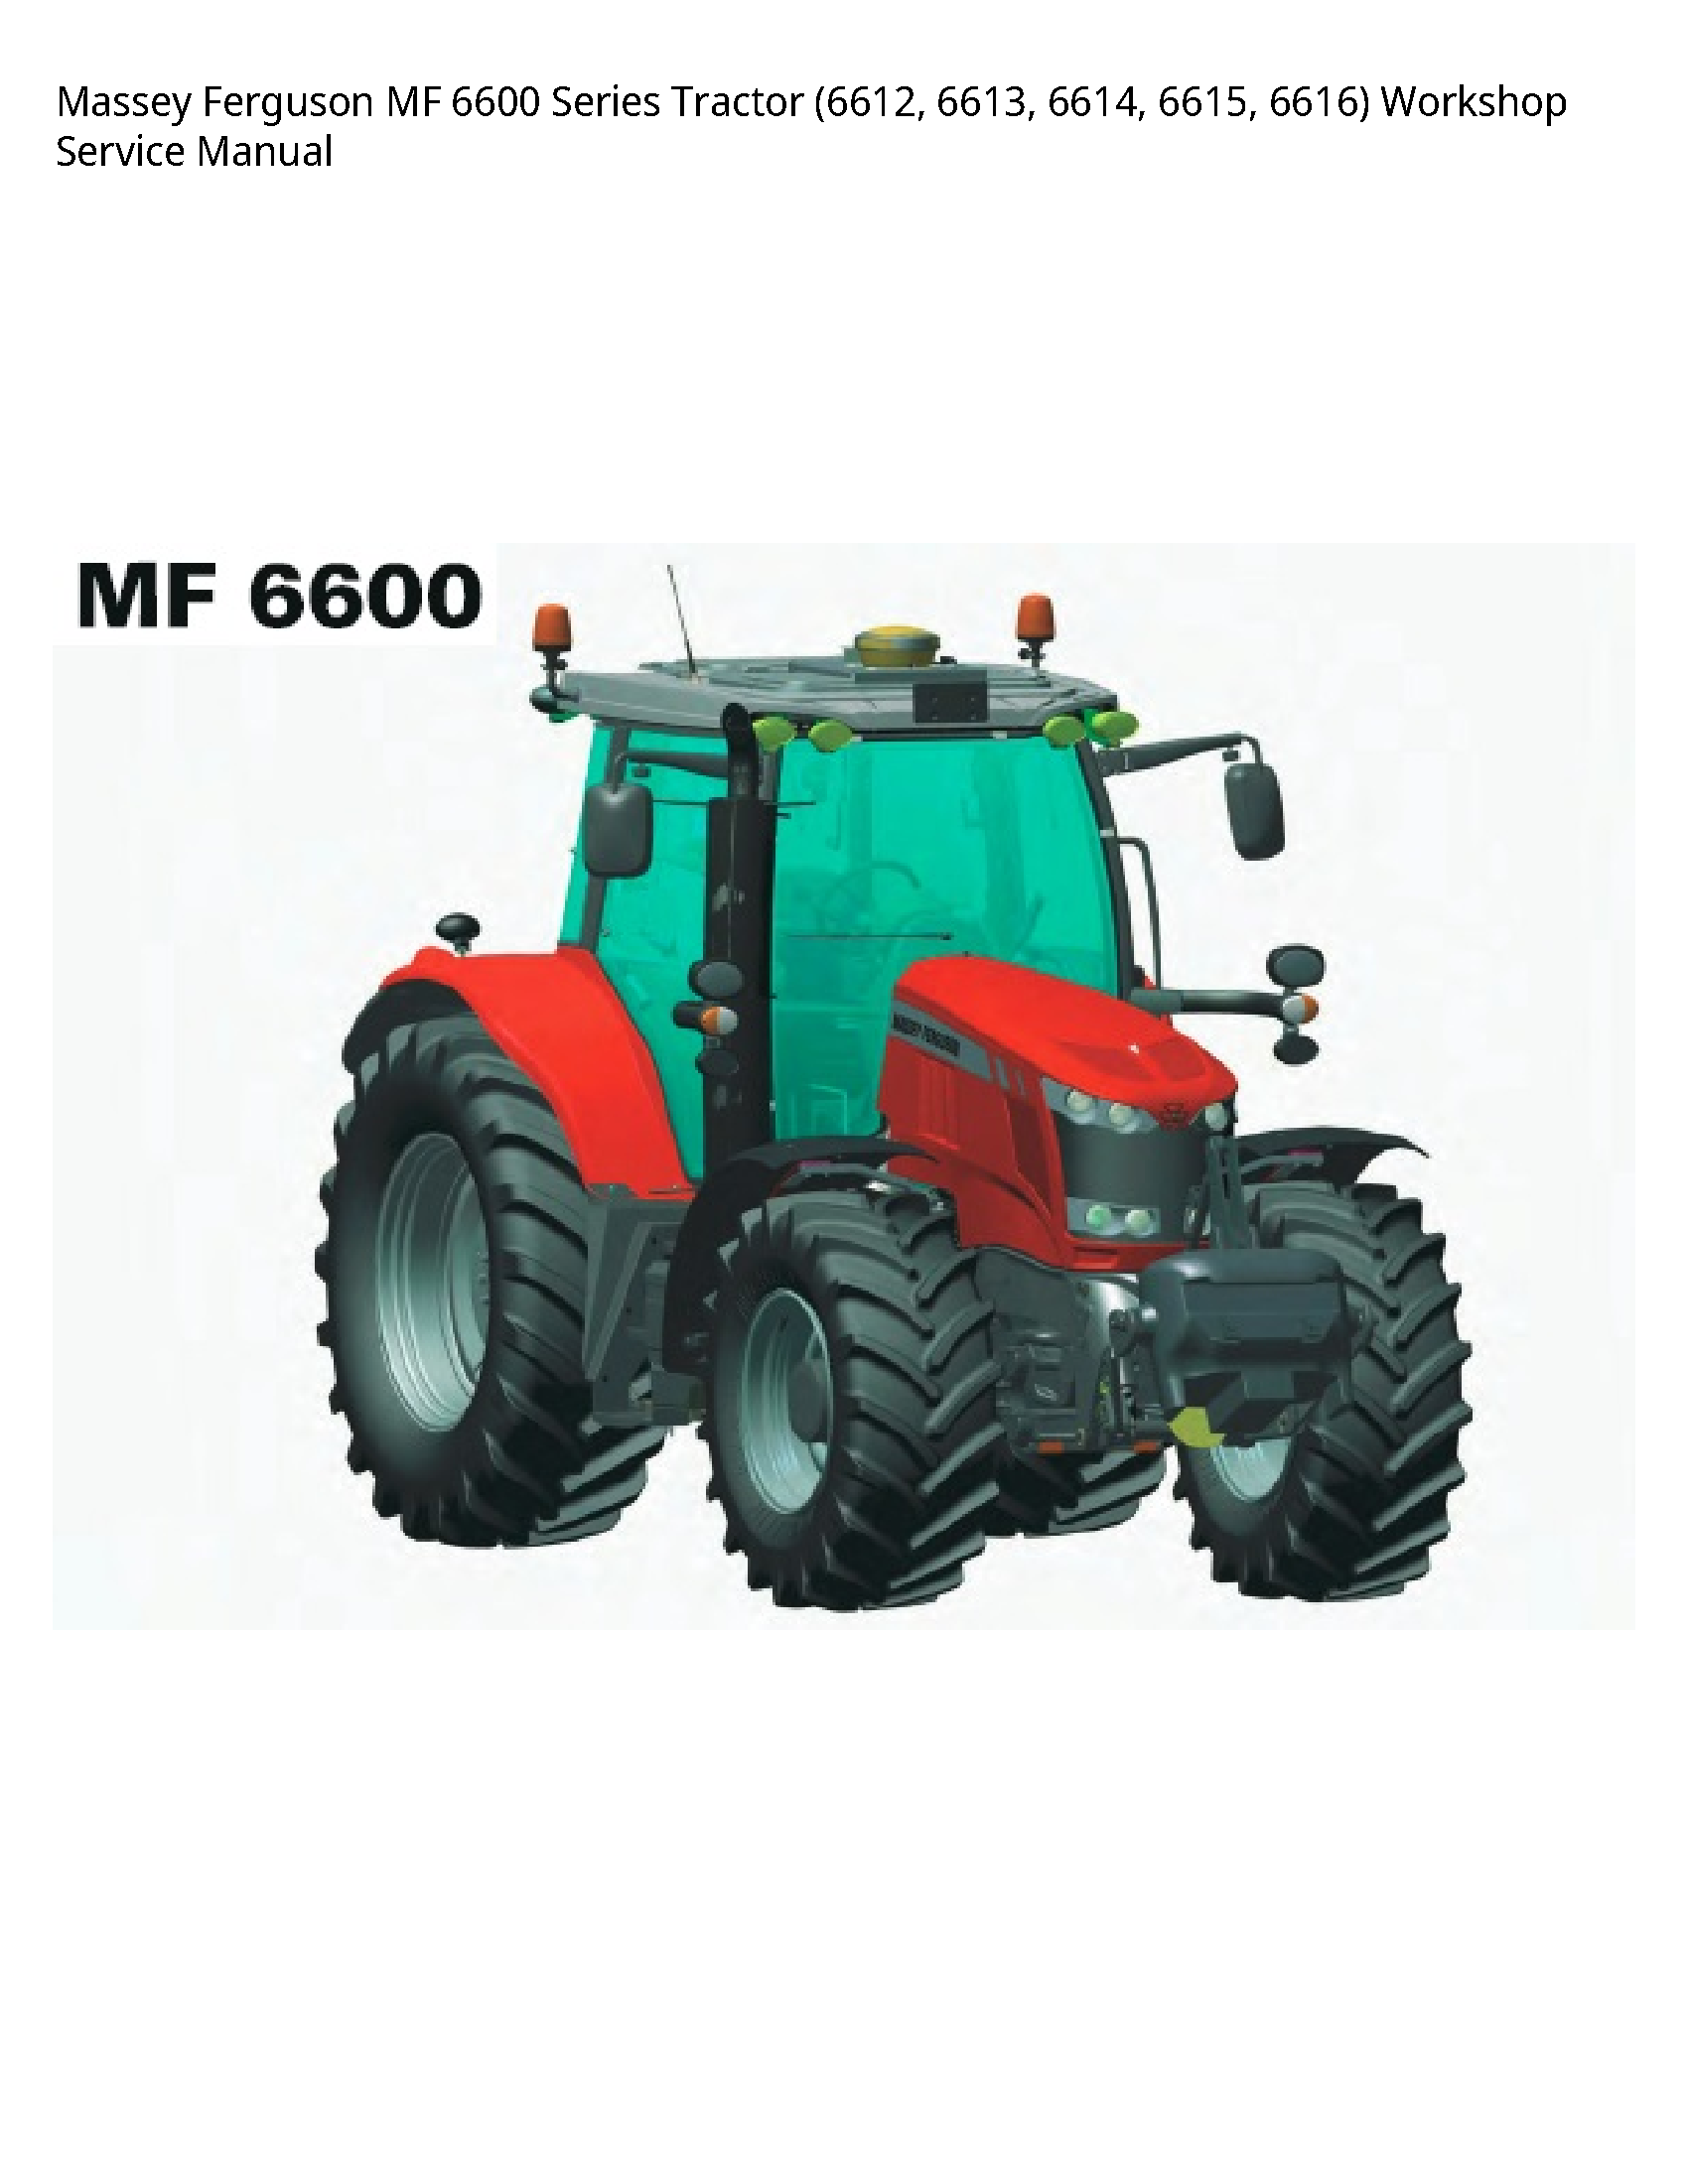 Massey Ferguson 6600 MF Series Tractor Service manual